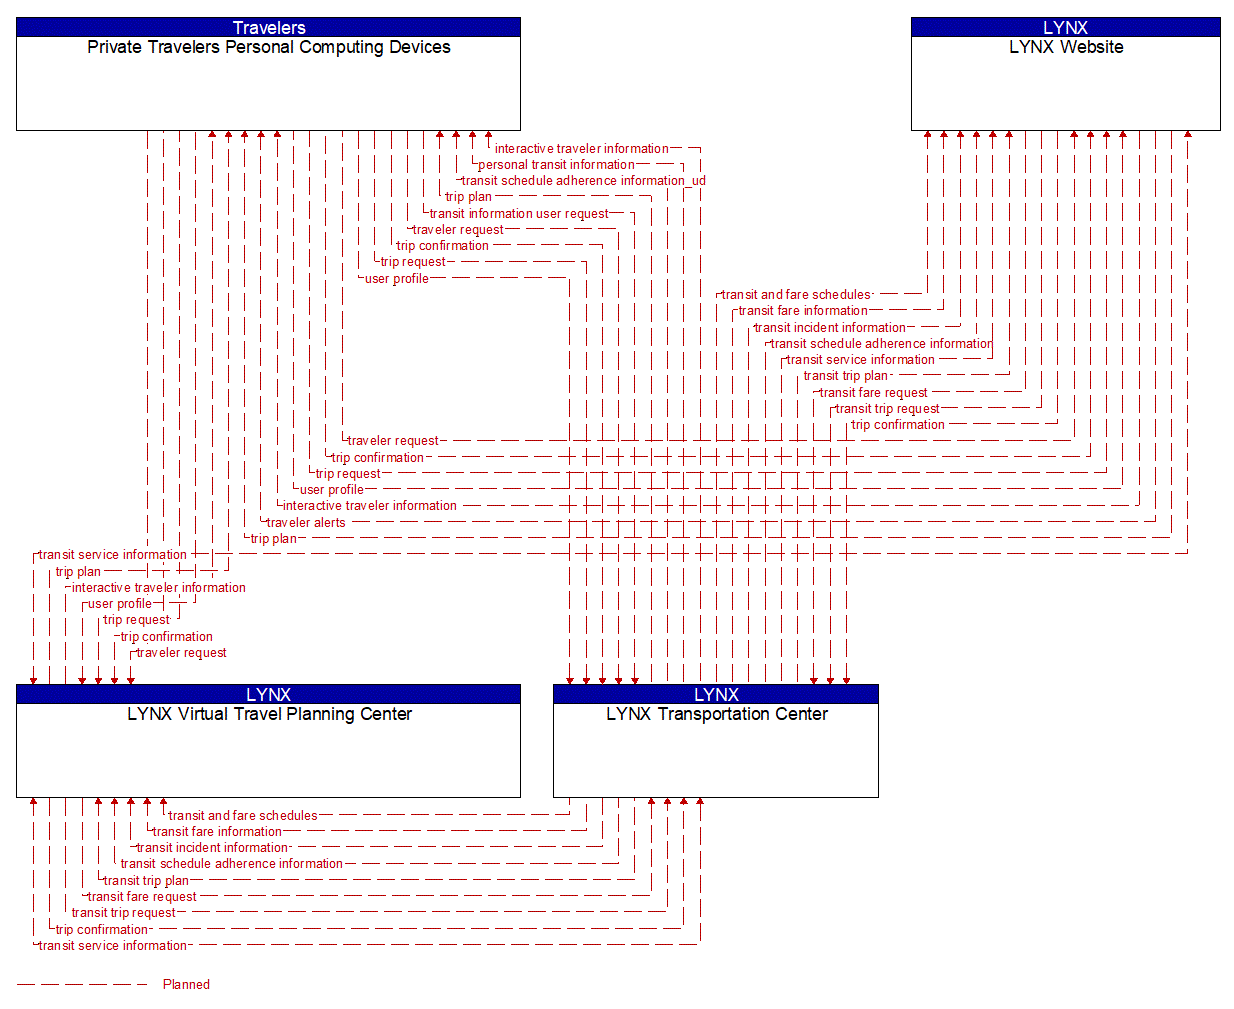 Project Information Flow Diagram: LYNX